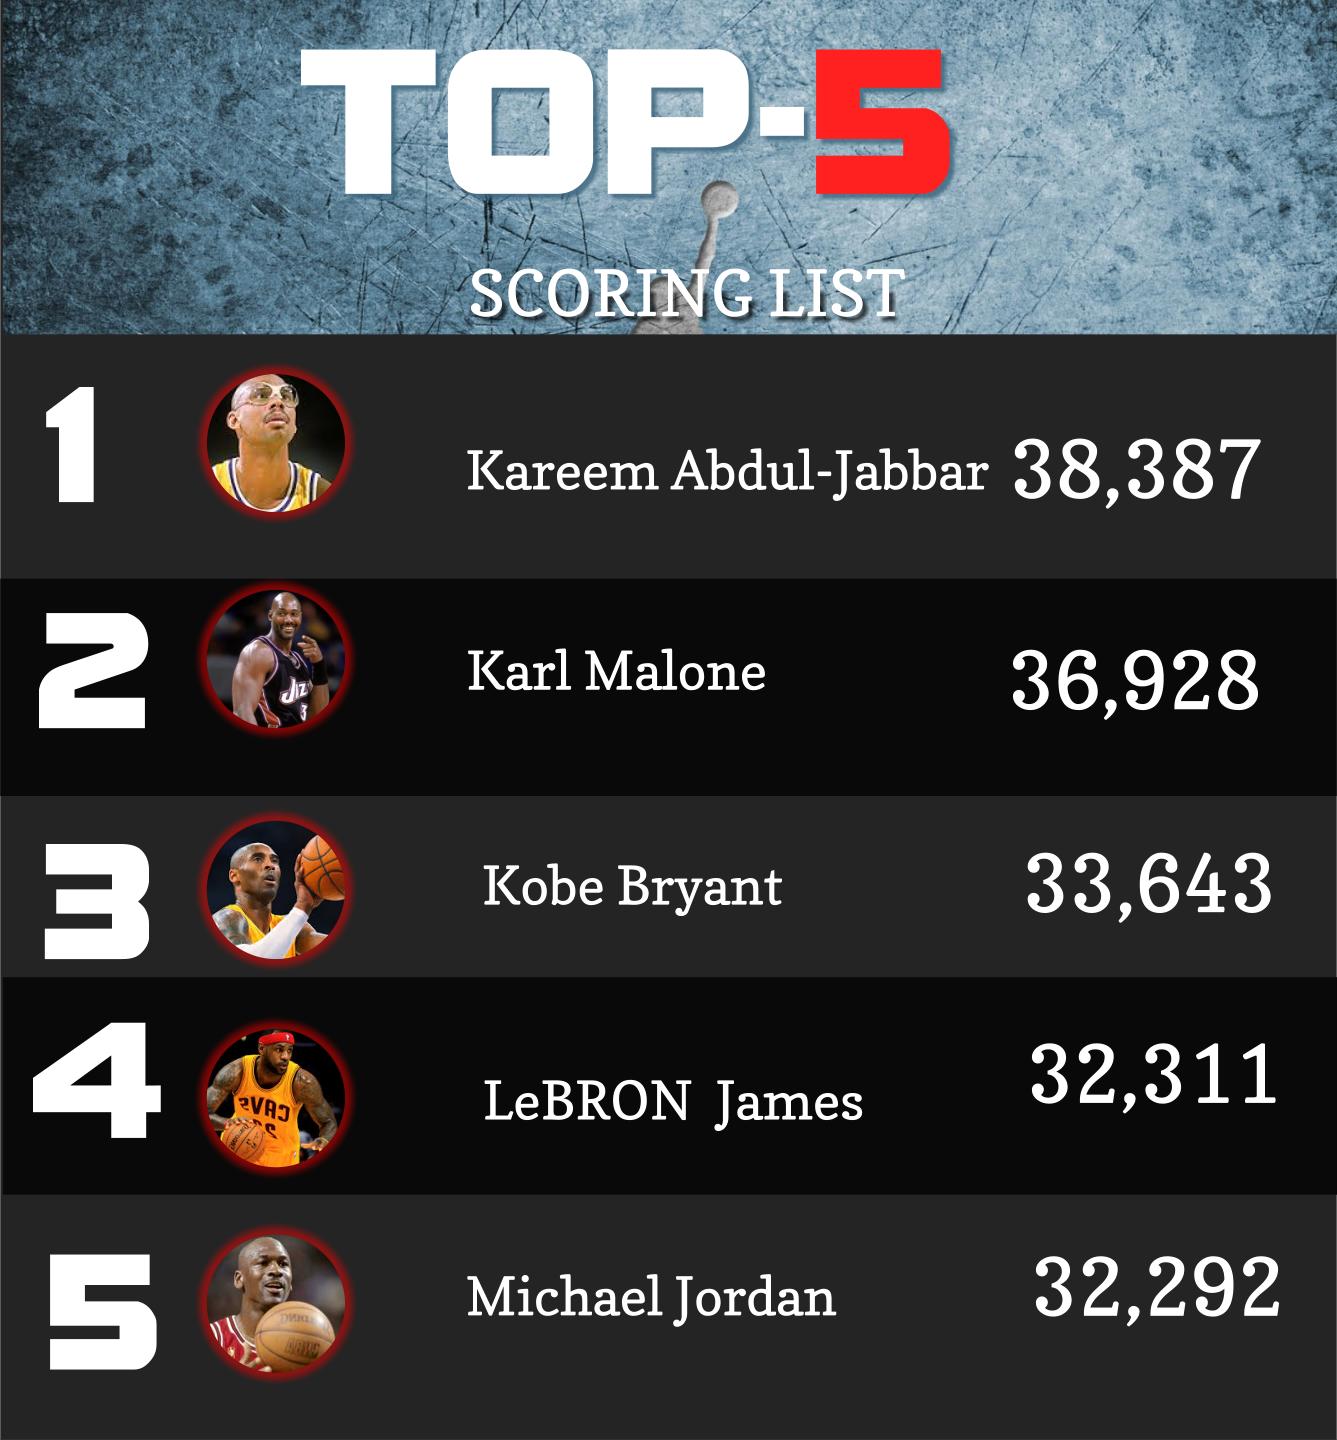 Lebron James surpassed Michael Jordan career points